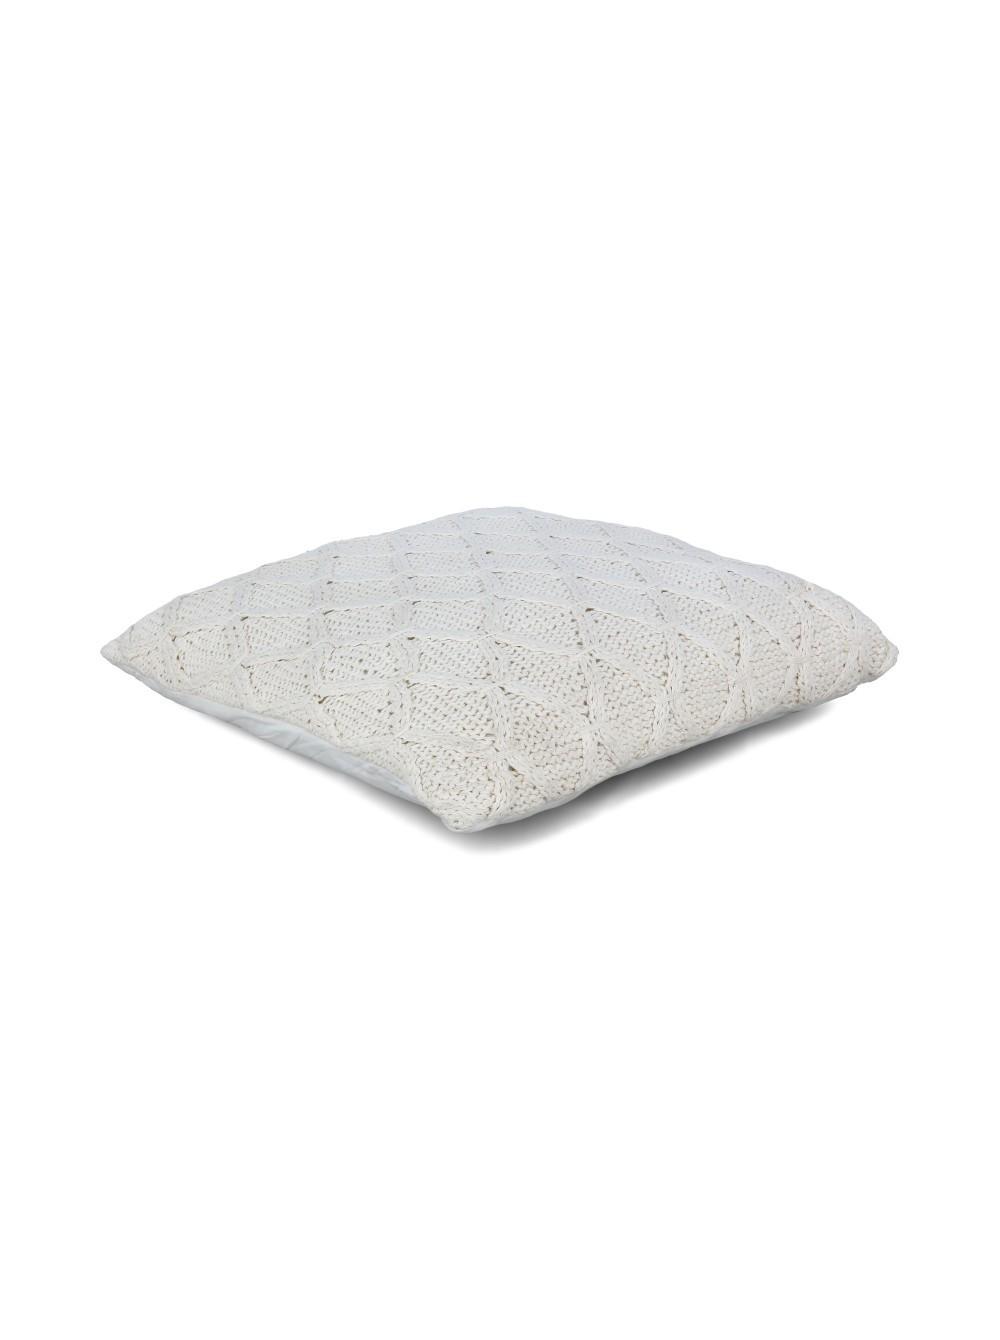 Selected image for GIFTDECOR Ukrasni beli vuneni jastuk rombovi 60x60cm